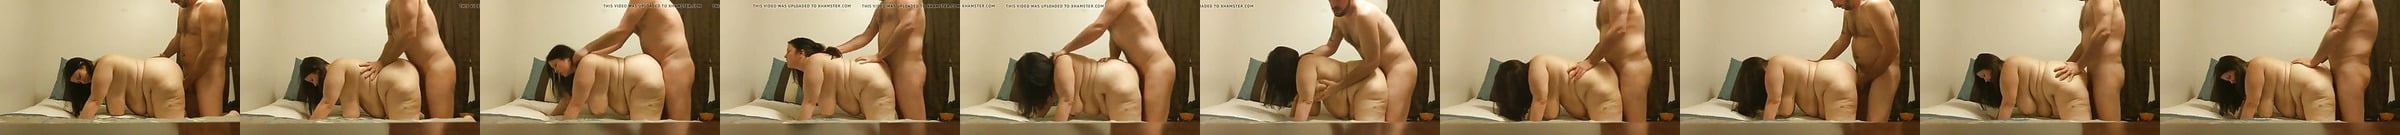 Vidéos Porno En Vedette Grosses Vidéos Porno Xhamster